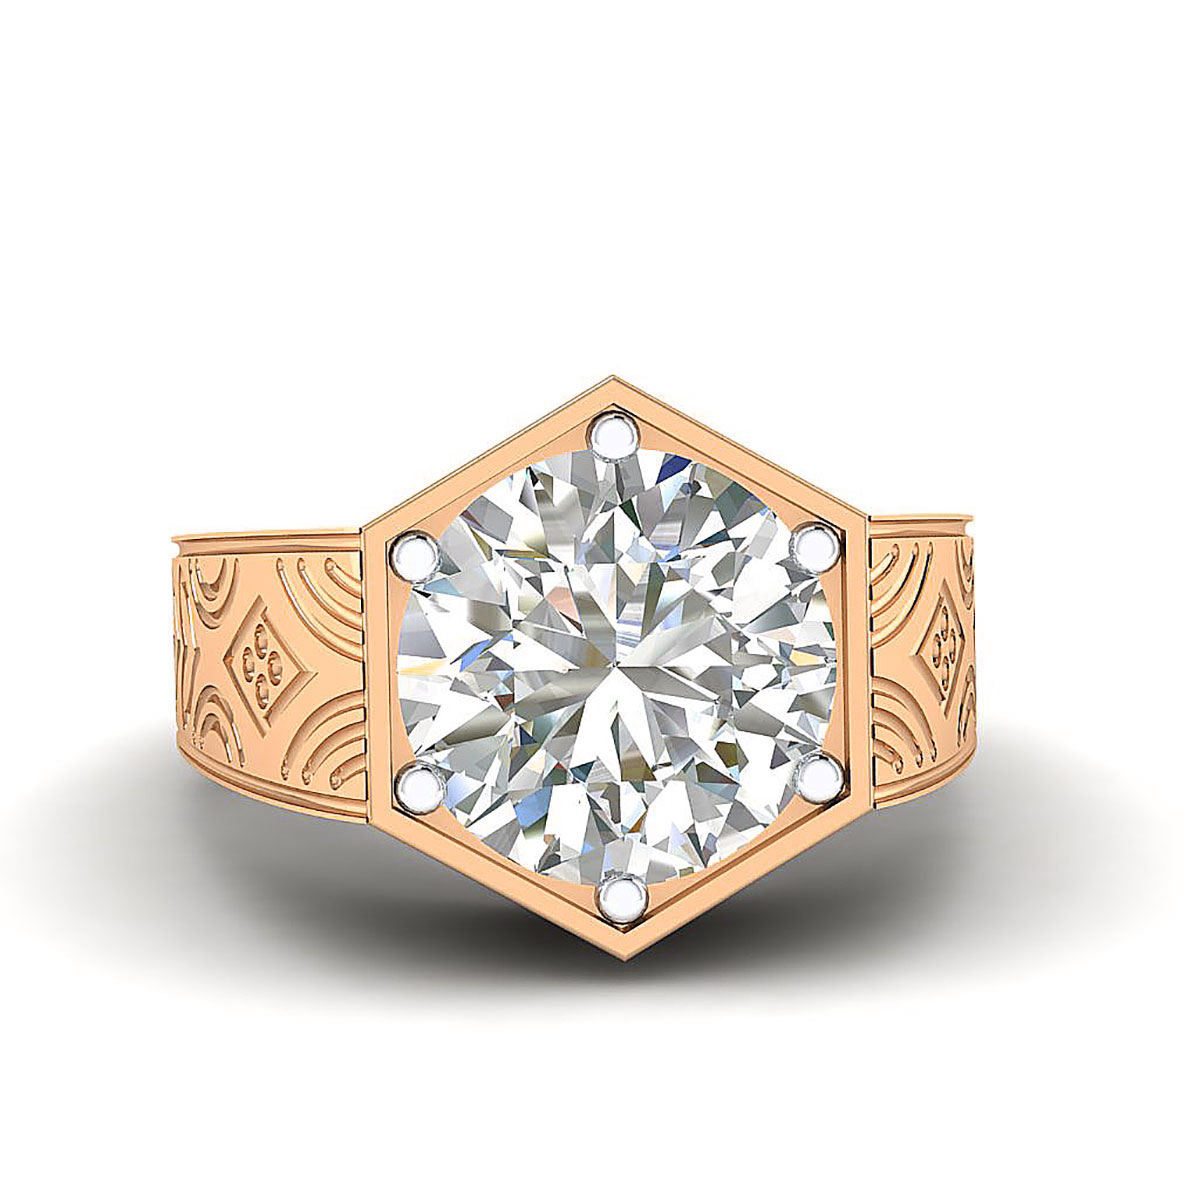 Men's Solitaire 1/2 Carat Diamond Ring in 14K Gold